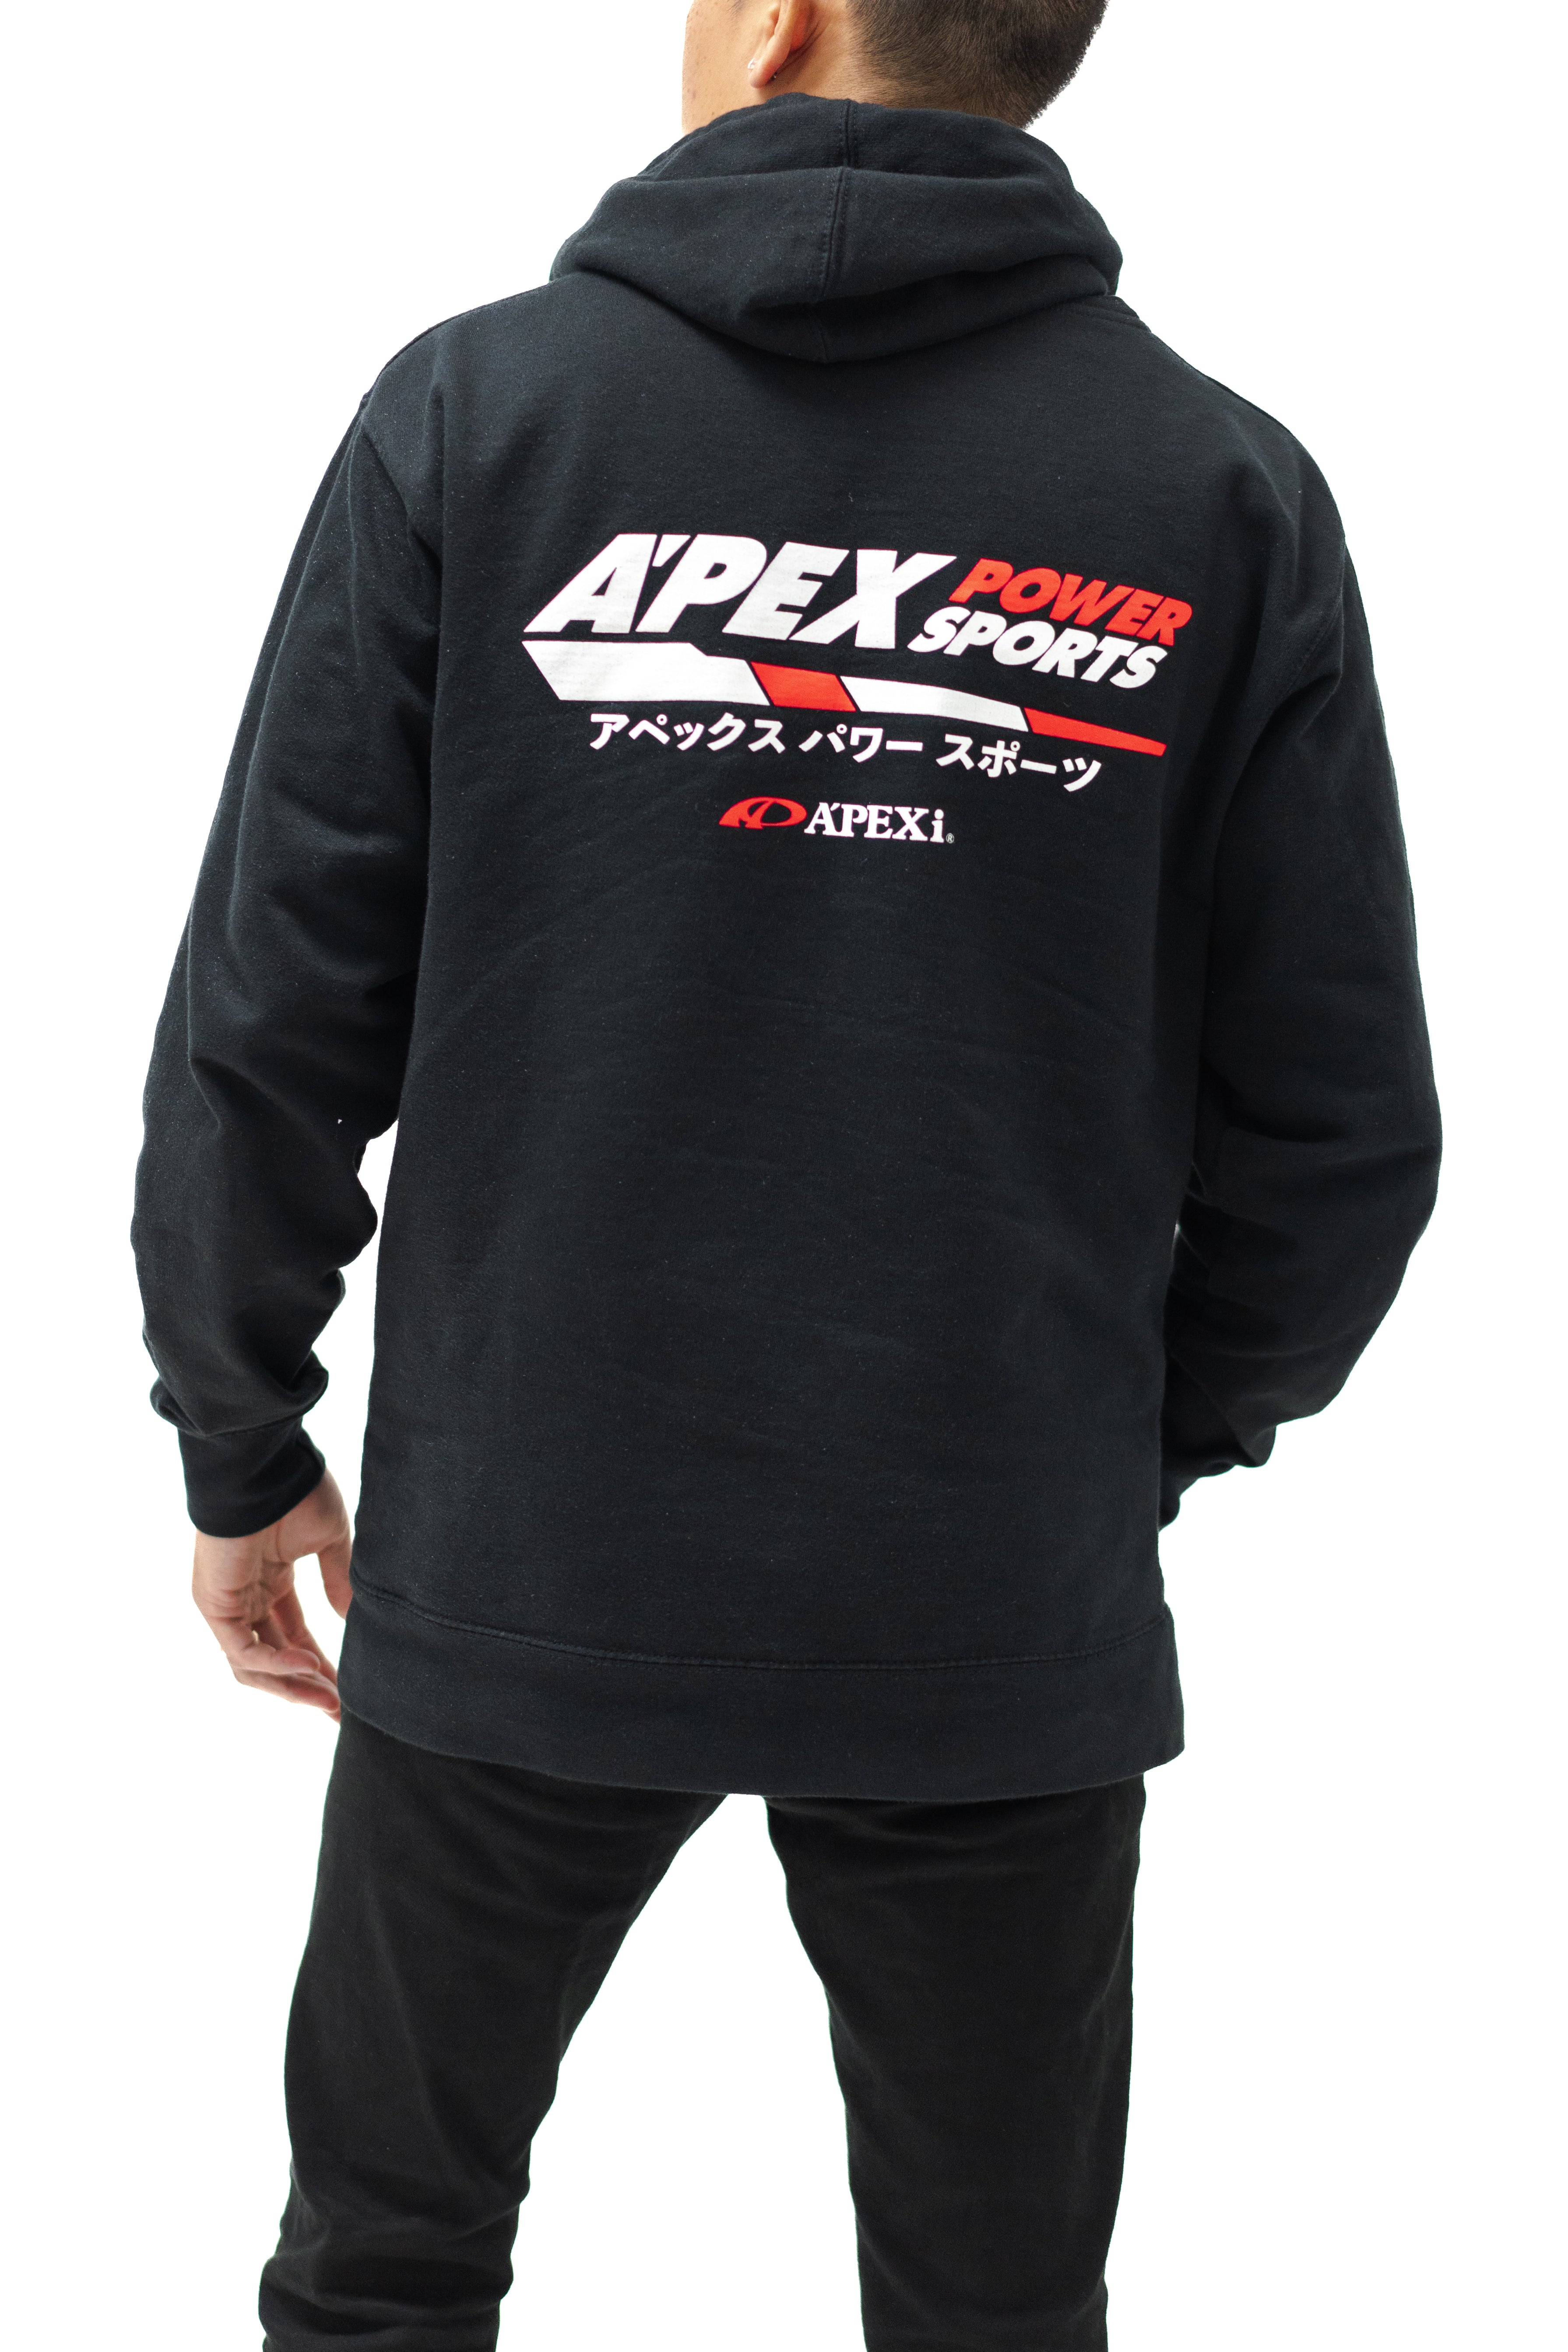 A'PEXi - APEX Power Sports Zip-Up Hoodie - 0